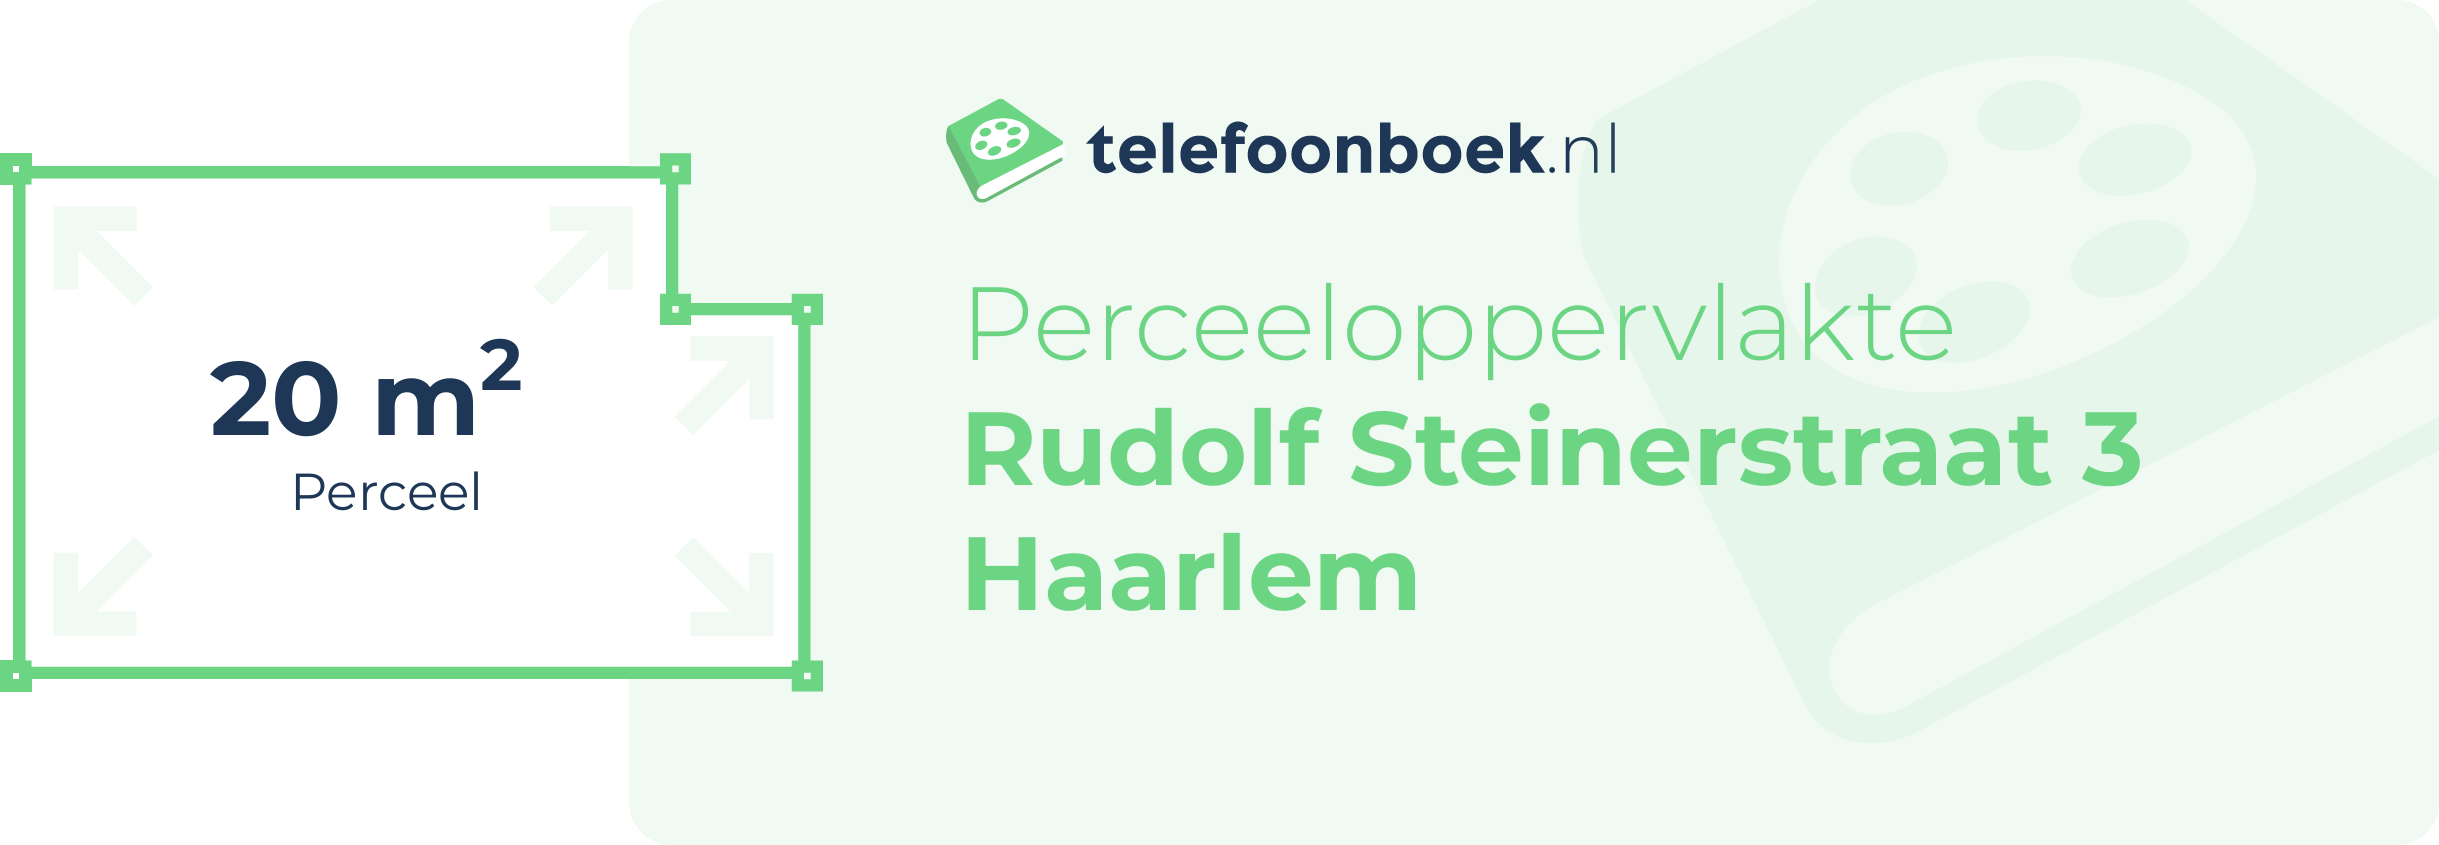 Perceeloppervlakte Rudolf Steinerstraat 3 Haarlem